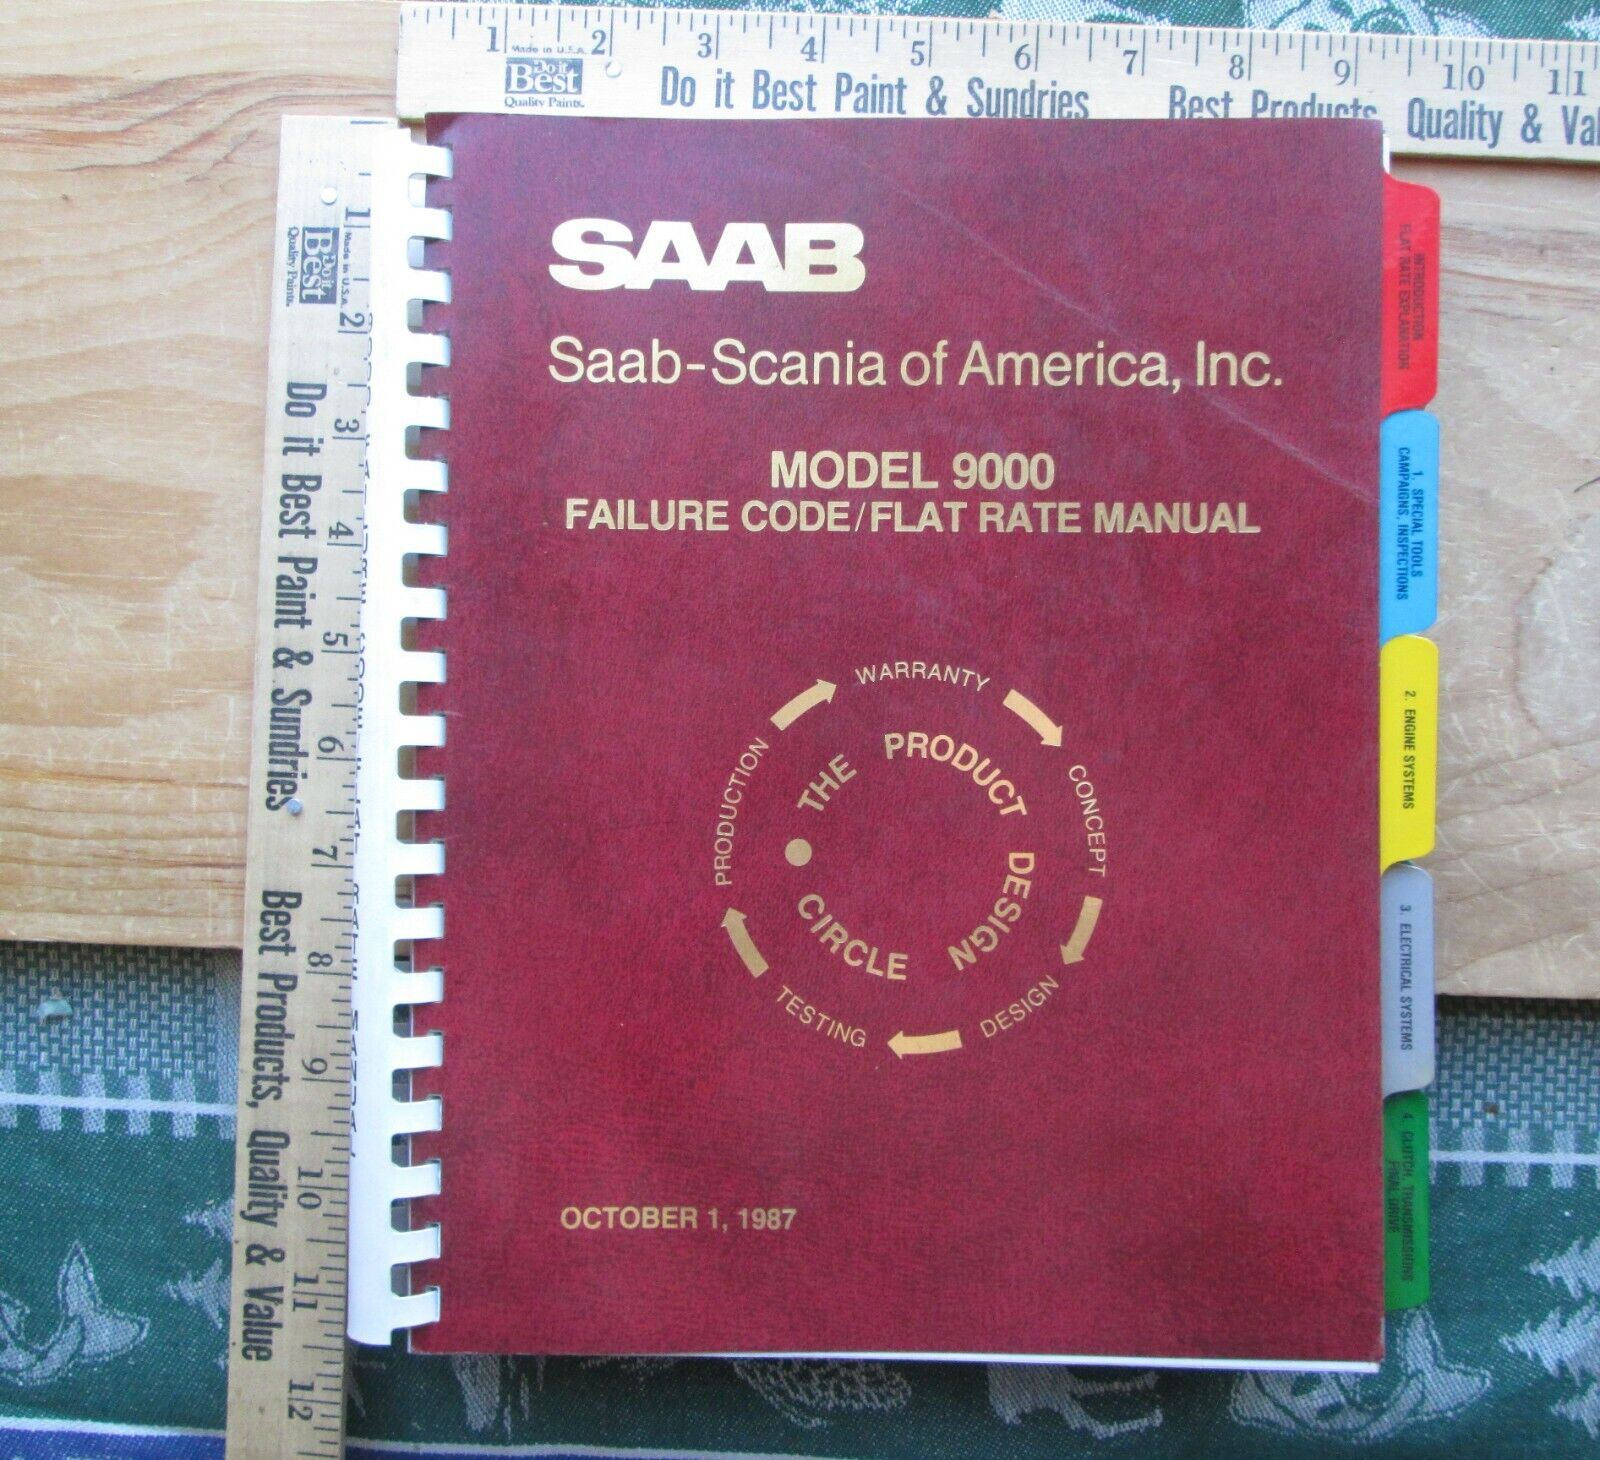 saab model 9000 failure code flat rate manual oct 1 1987